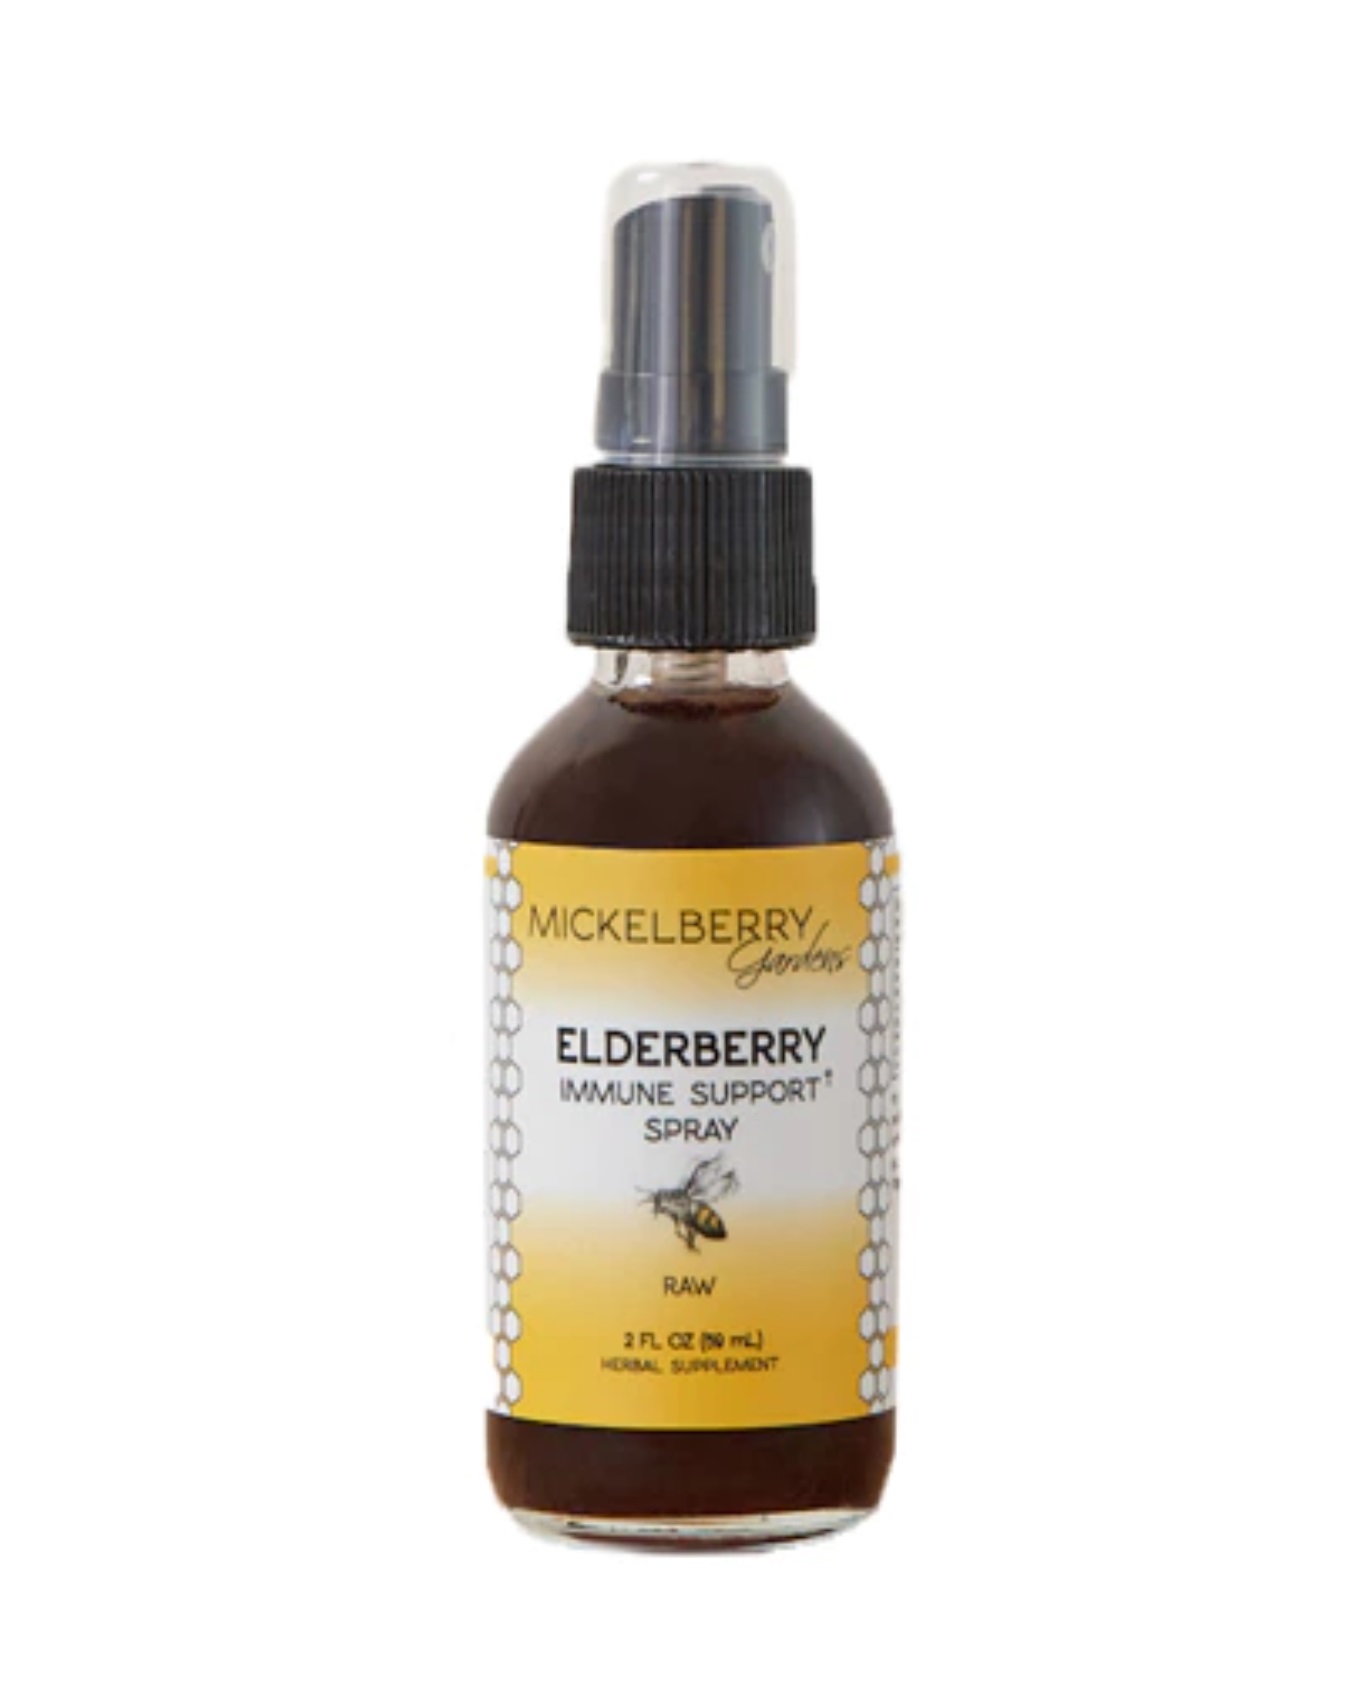 Image of Elderberry Immune Support Spray